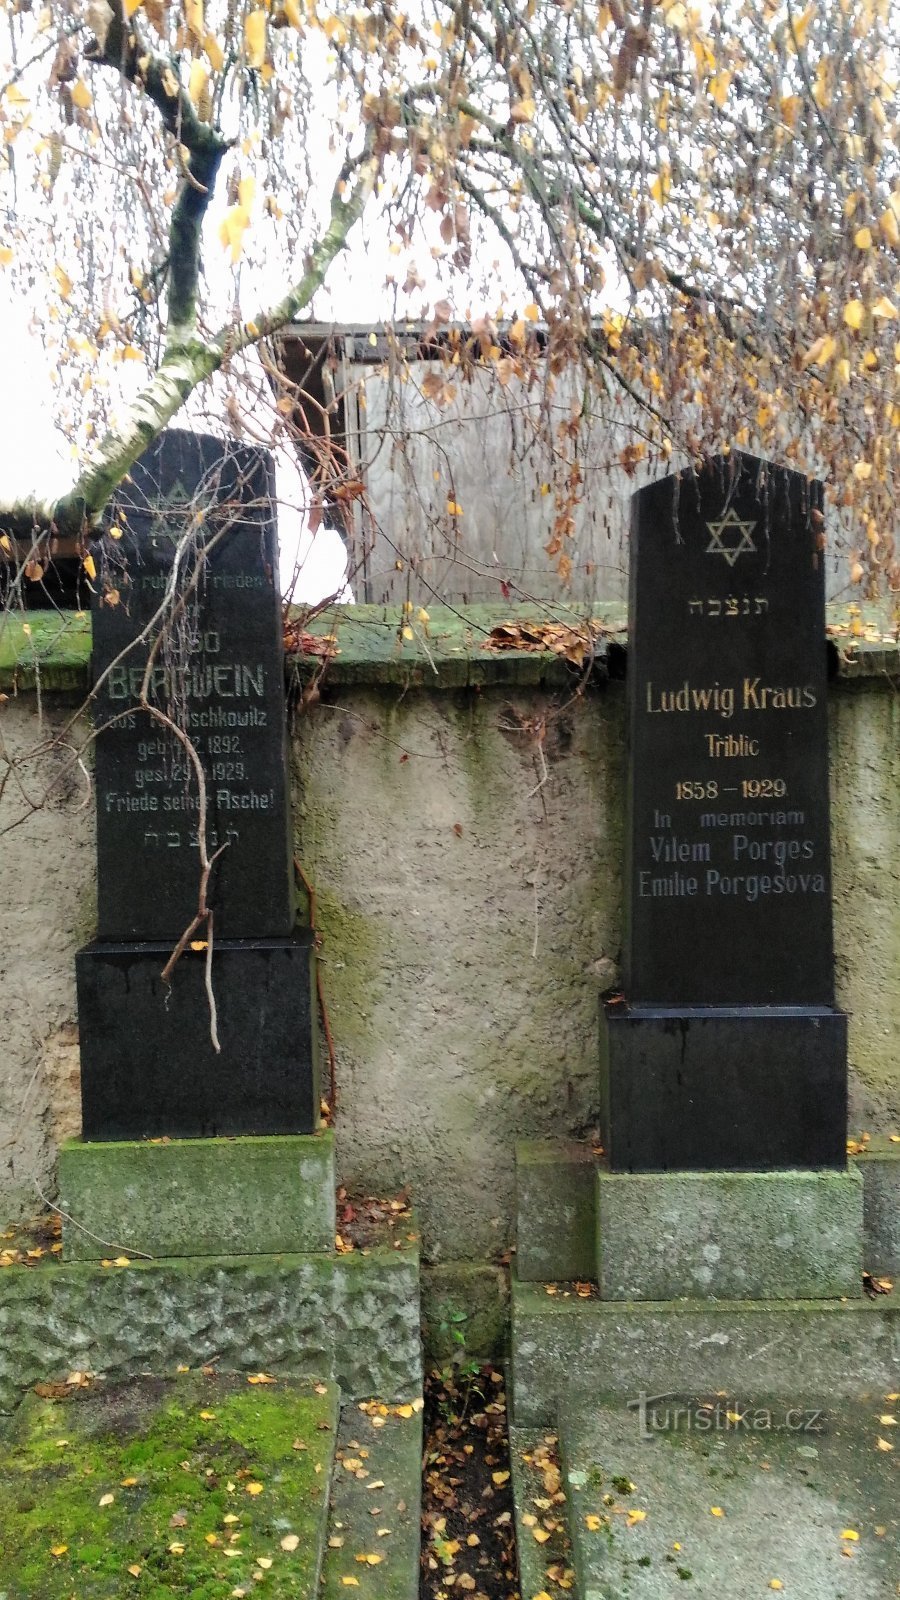 Joodse begraafplaats in Lovosice.